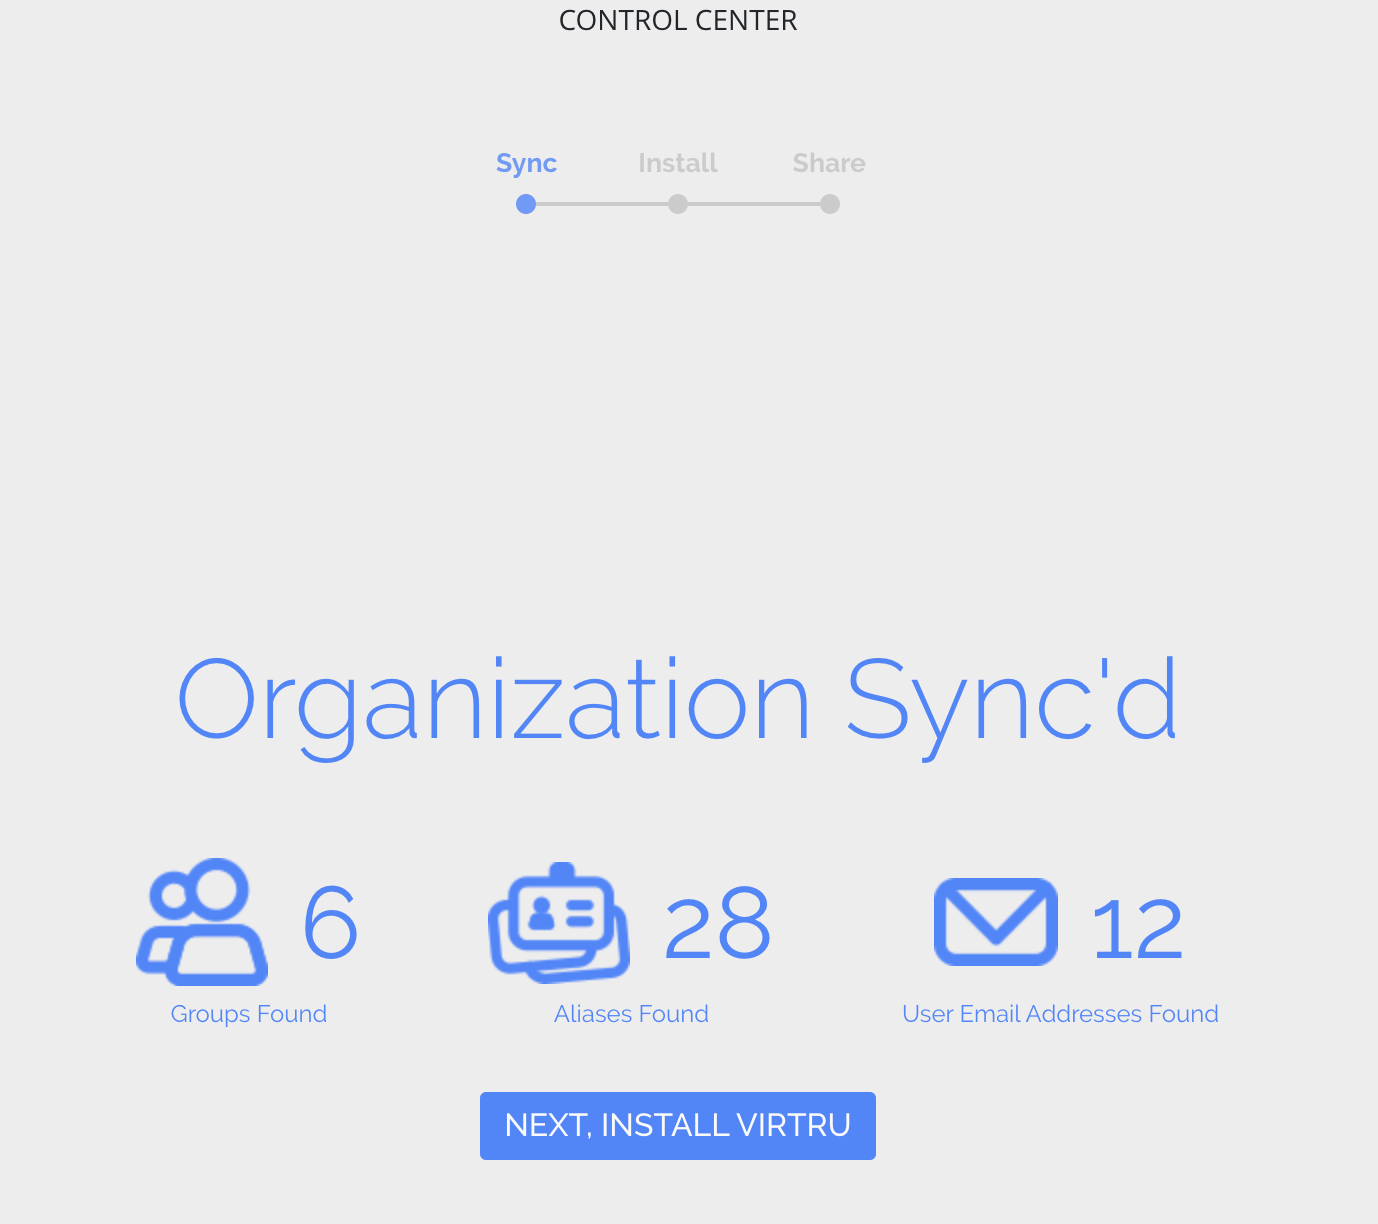 Organization Sync'd screen